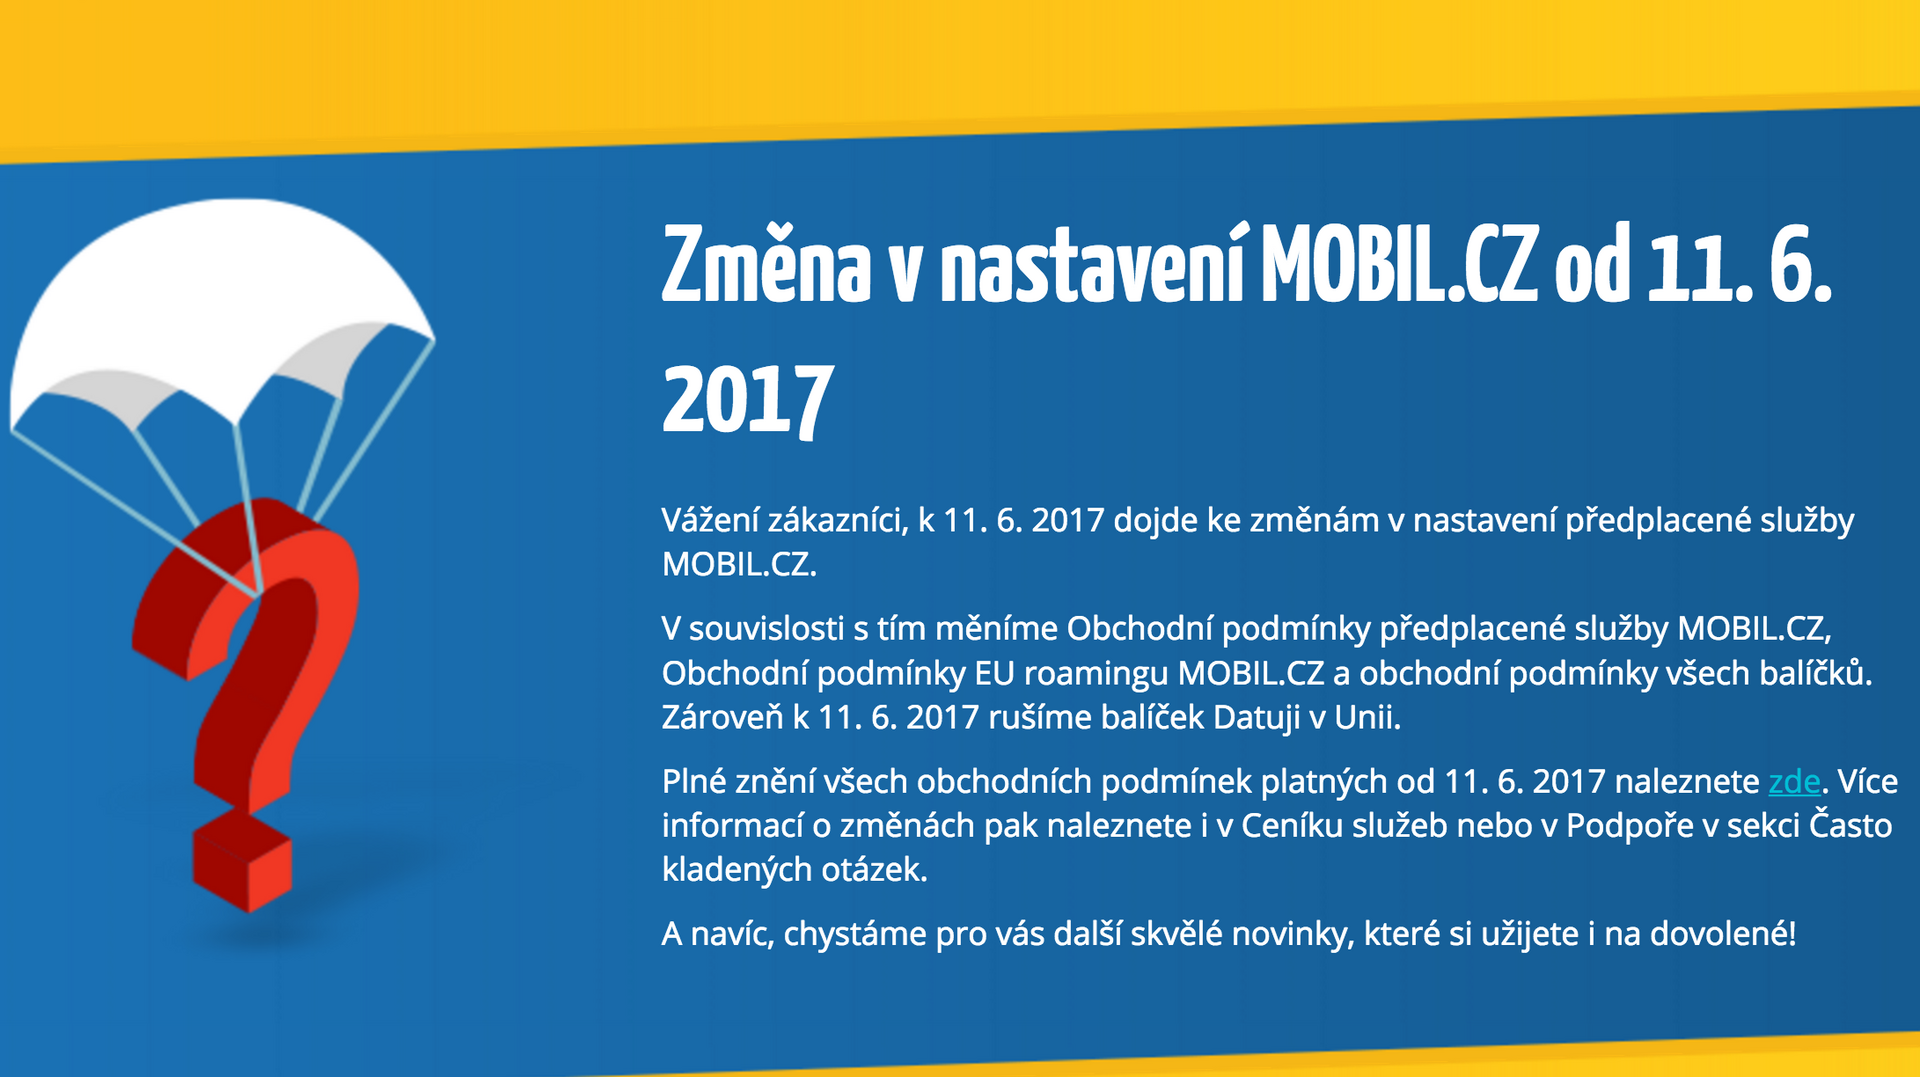 Mobil.cz